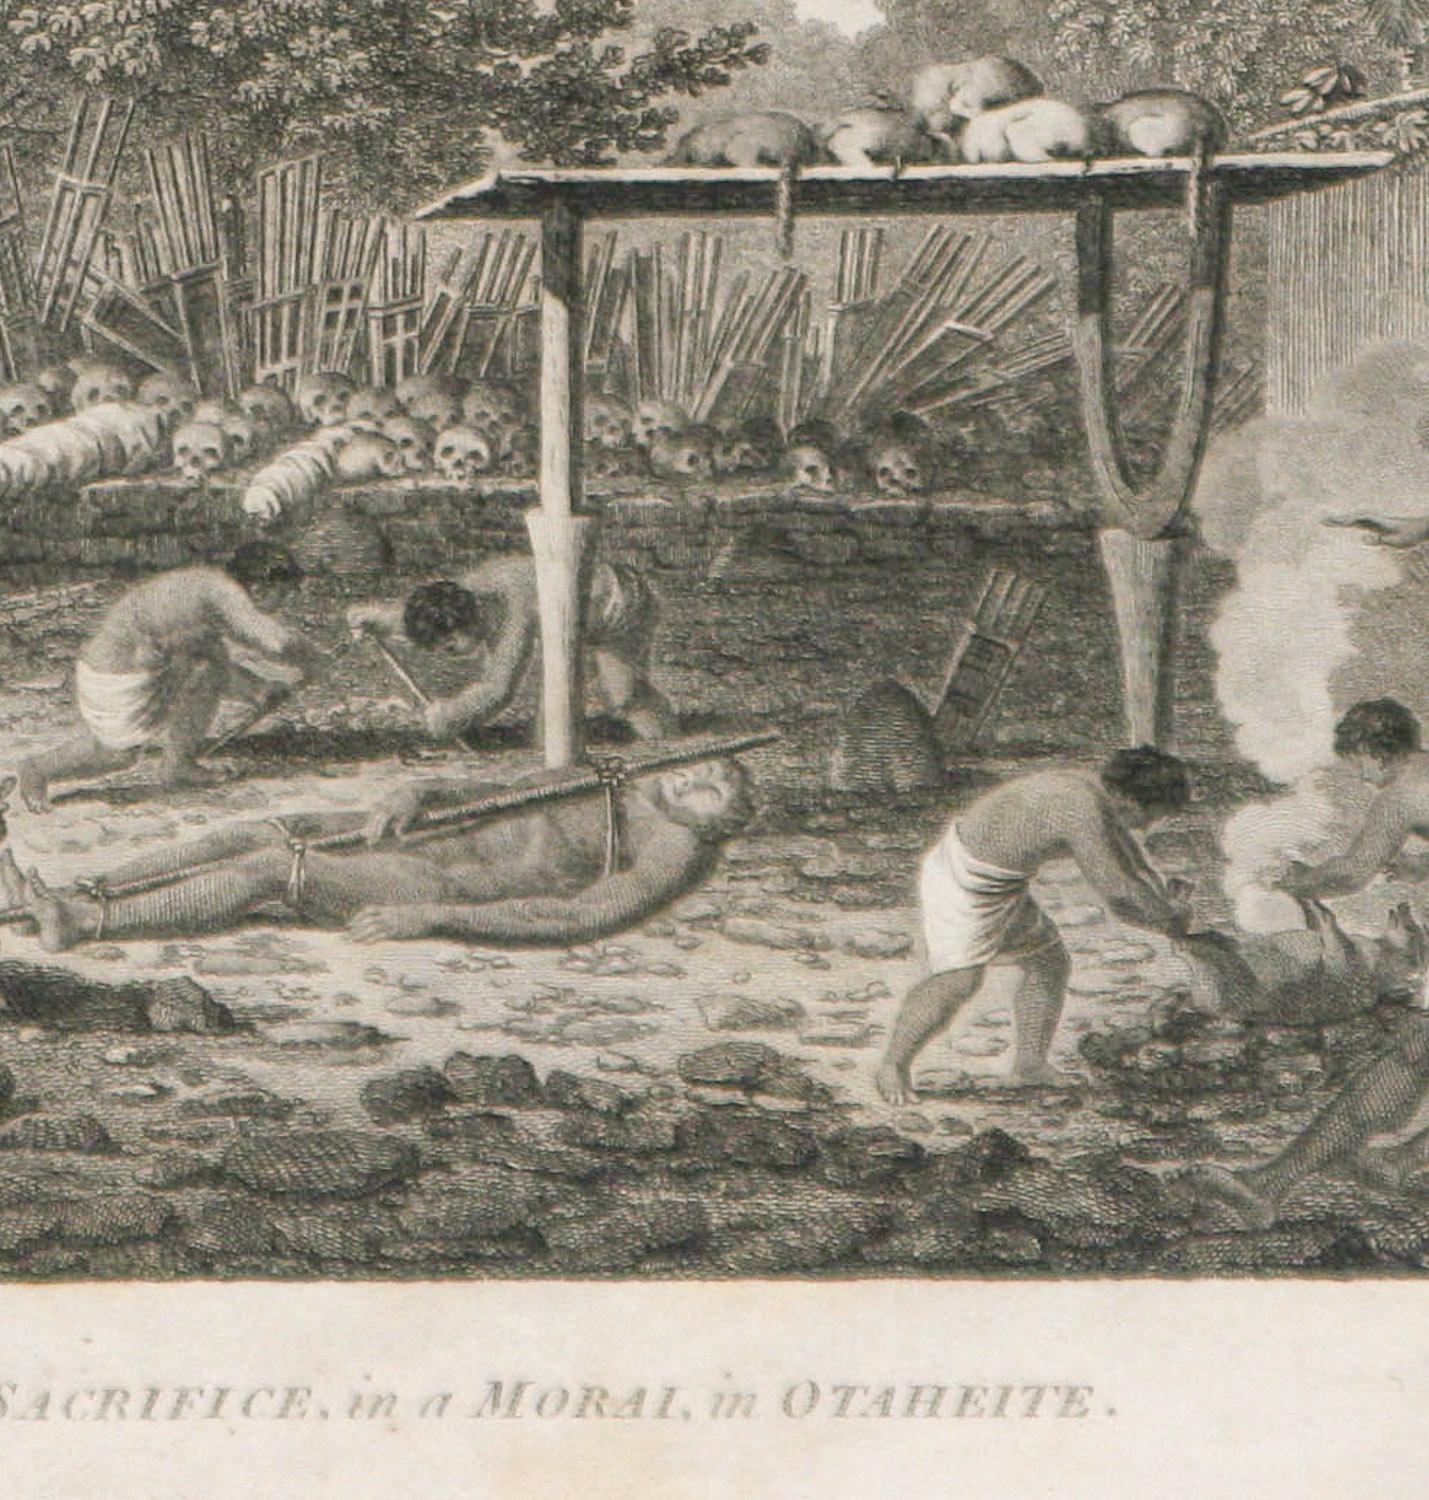 A Human Sacrifice, in a Morai, in Otaheite (Tahiti) 1784 James Cook Final Voyage - Gray Landscape Print by John Webber